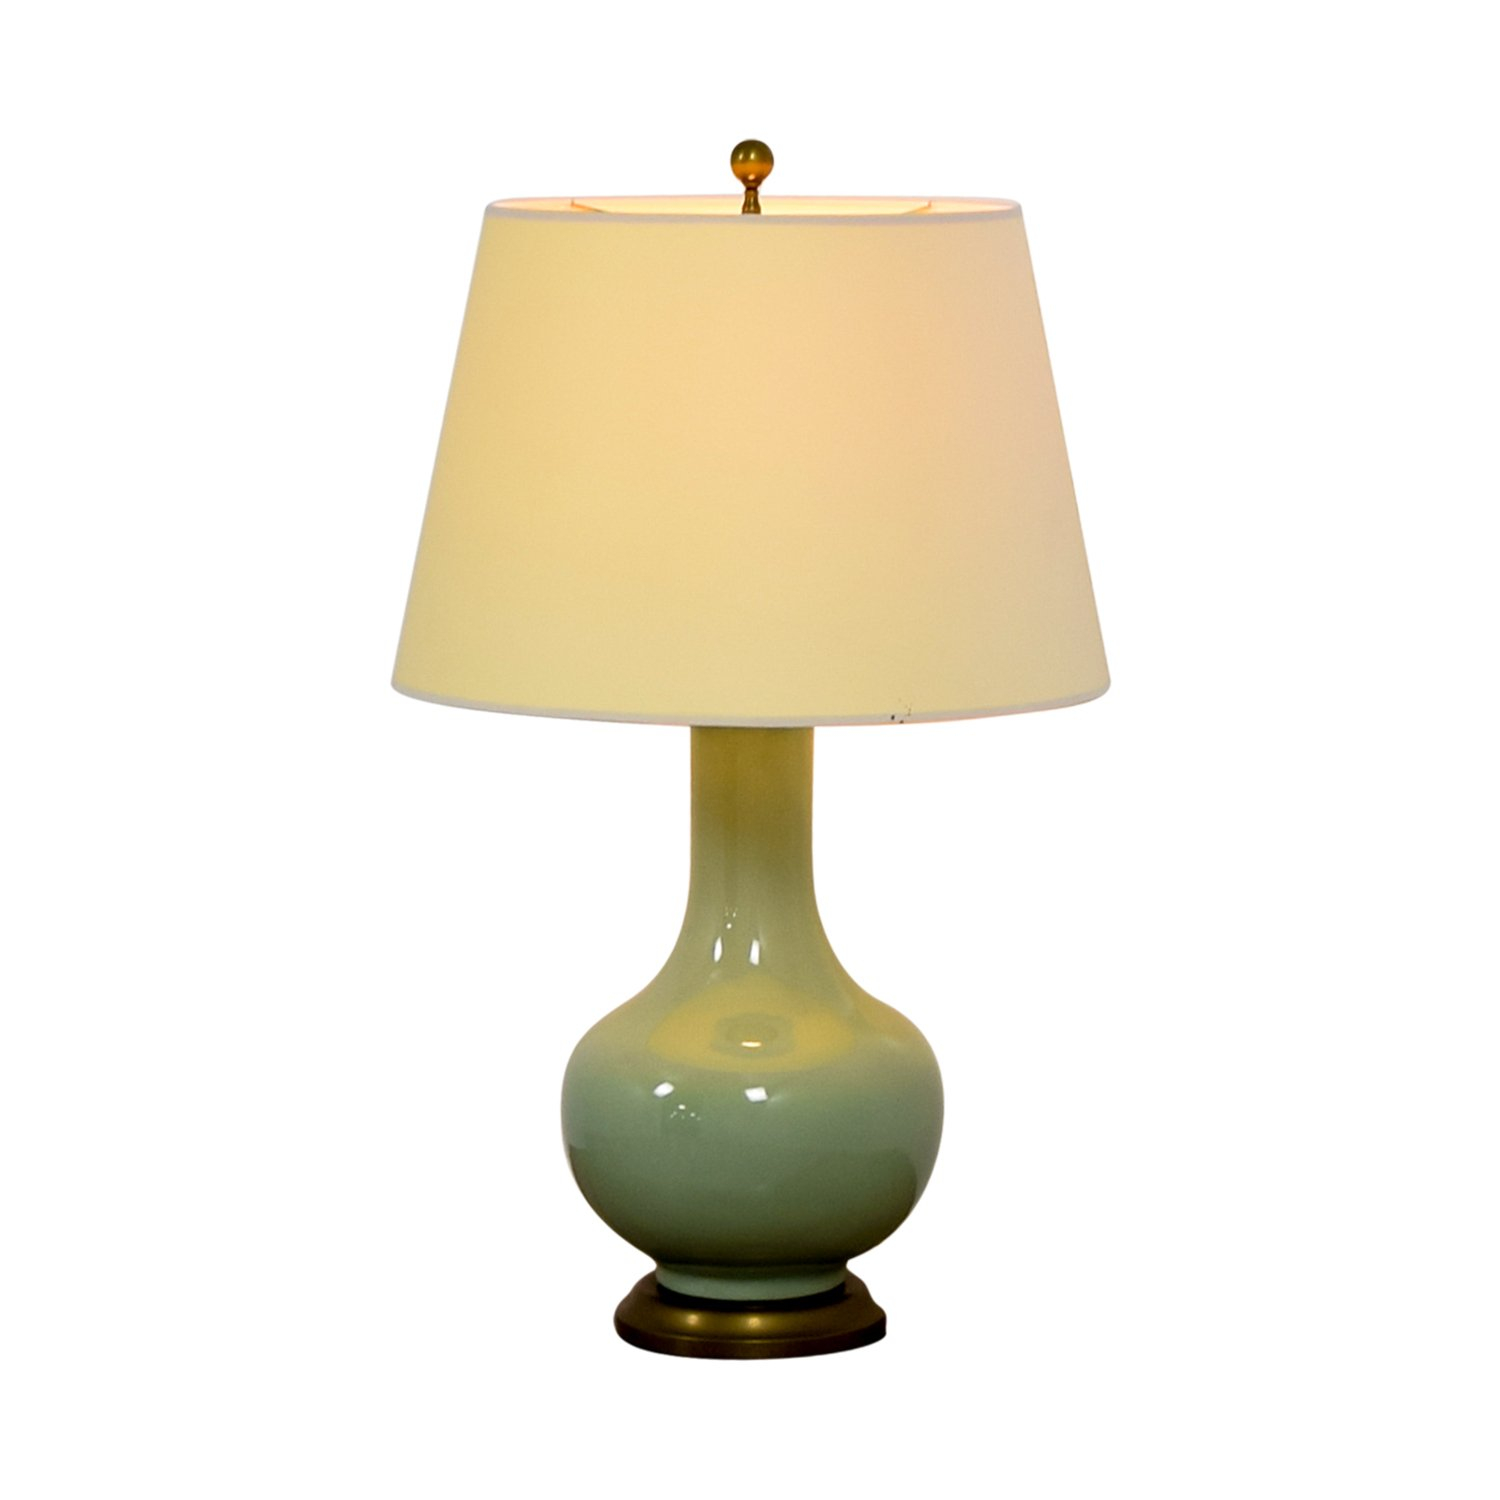 Aerin Michelena Porcelain Table Lamp Williams Sonoma La Z within dimensions 1500 X 1500